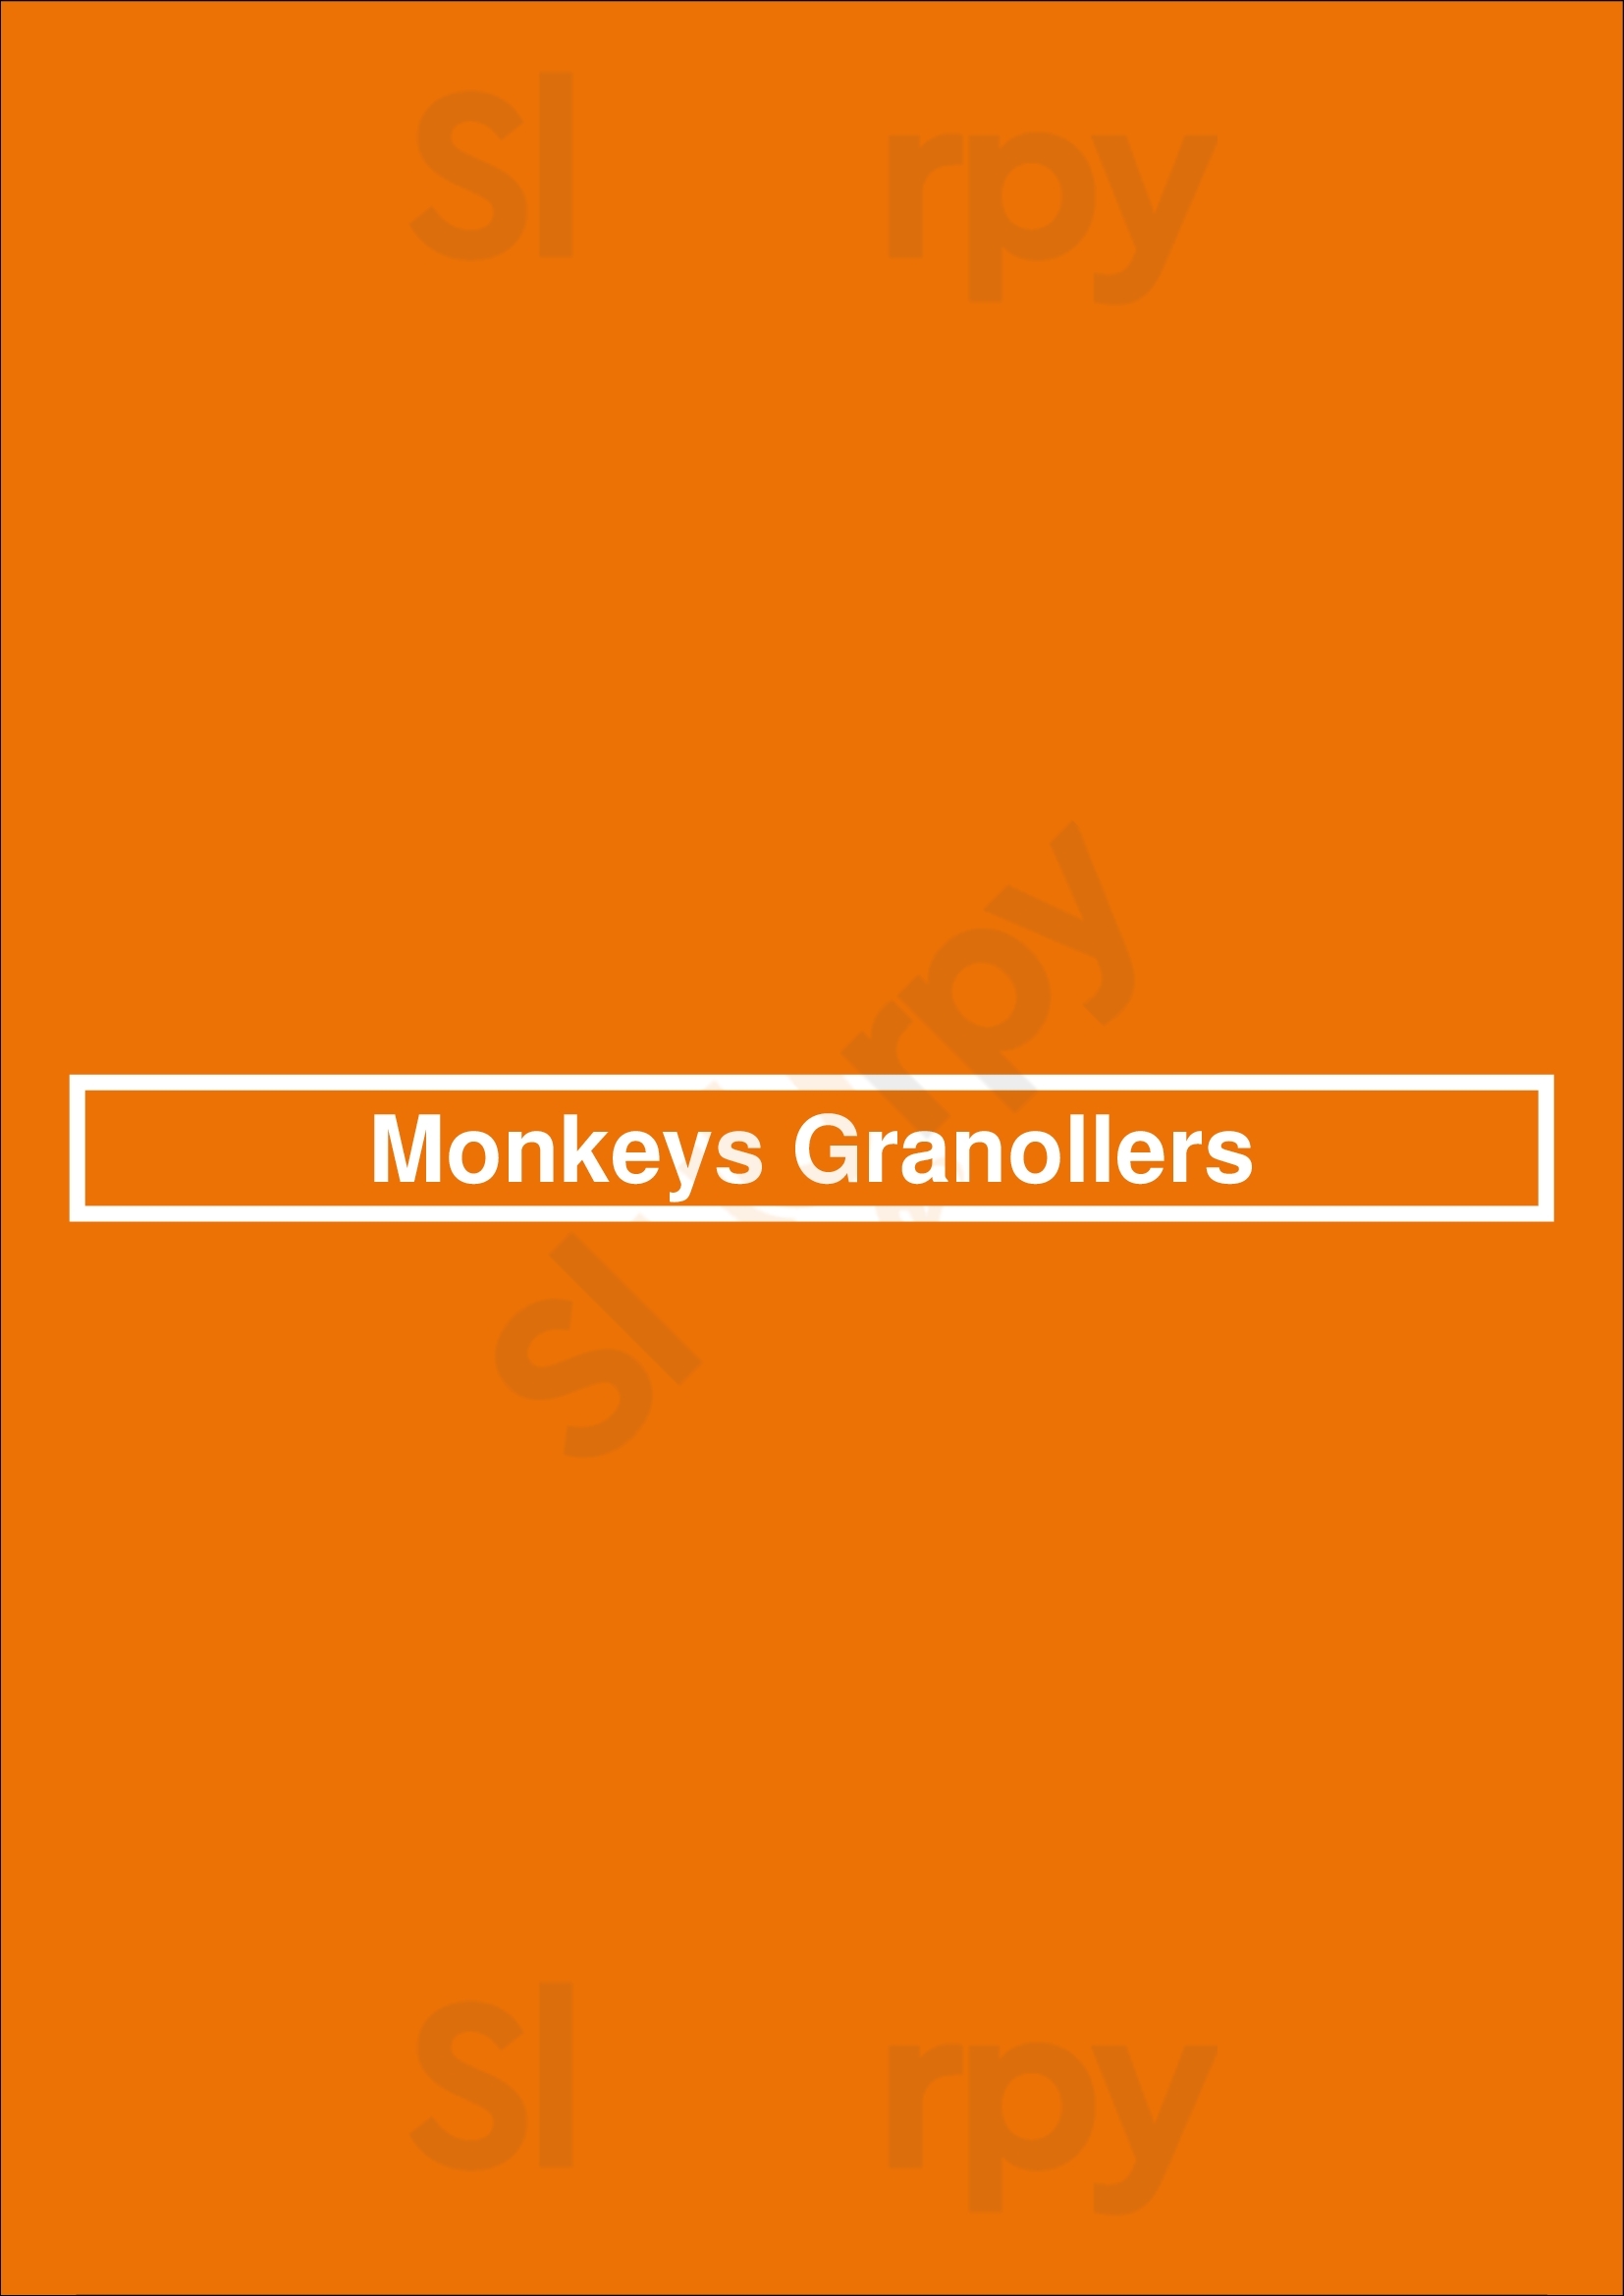 Monkeys Granollers Granollers Menu - 1